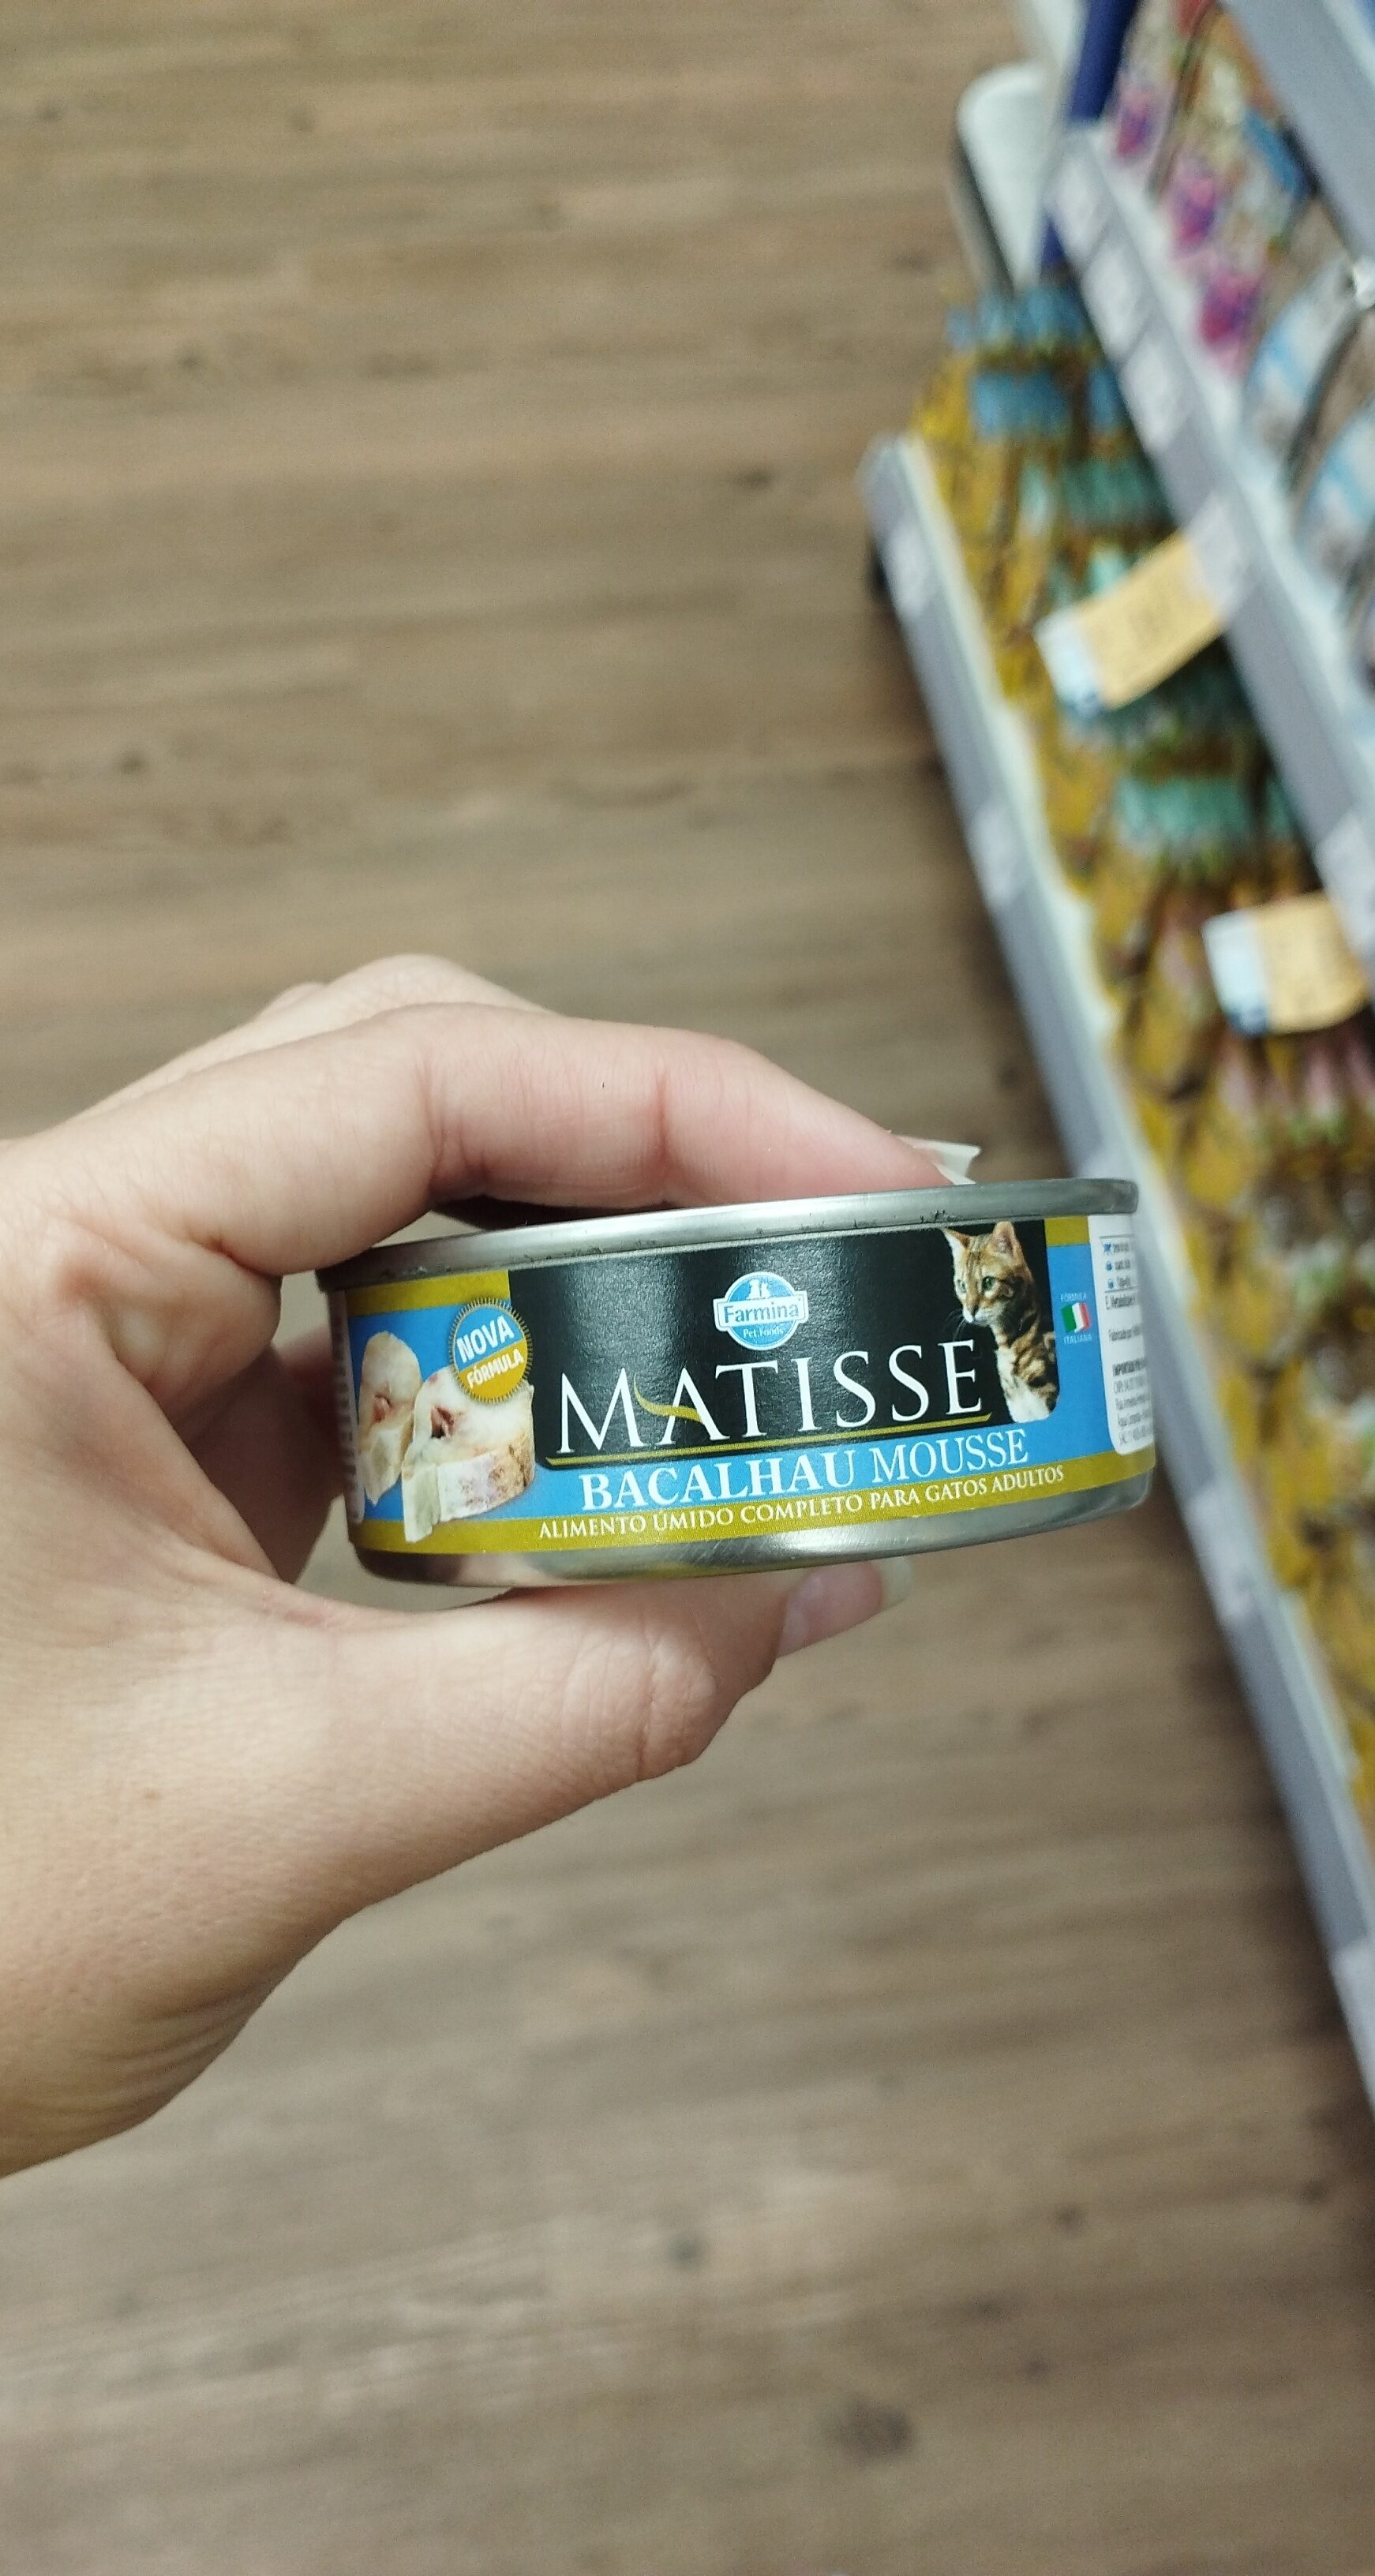 Matisse bacalhau mousse - Product - pt